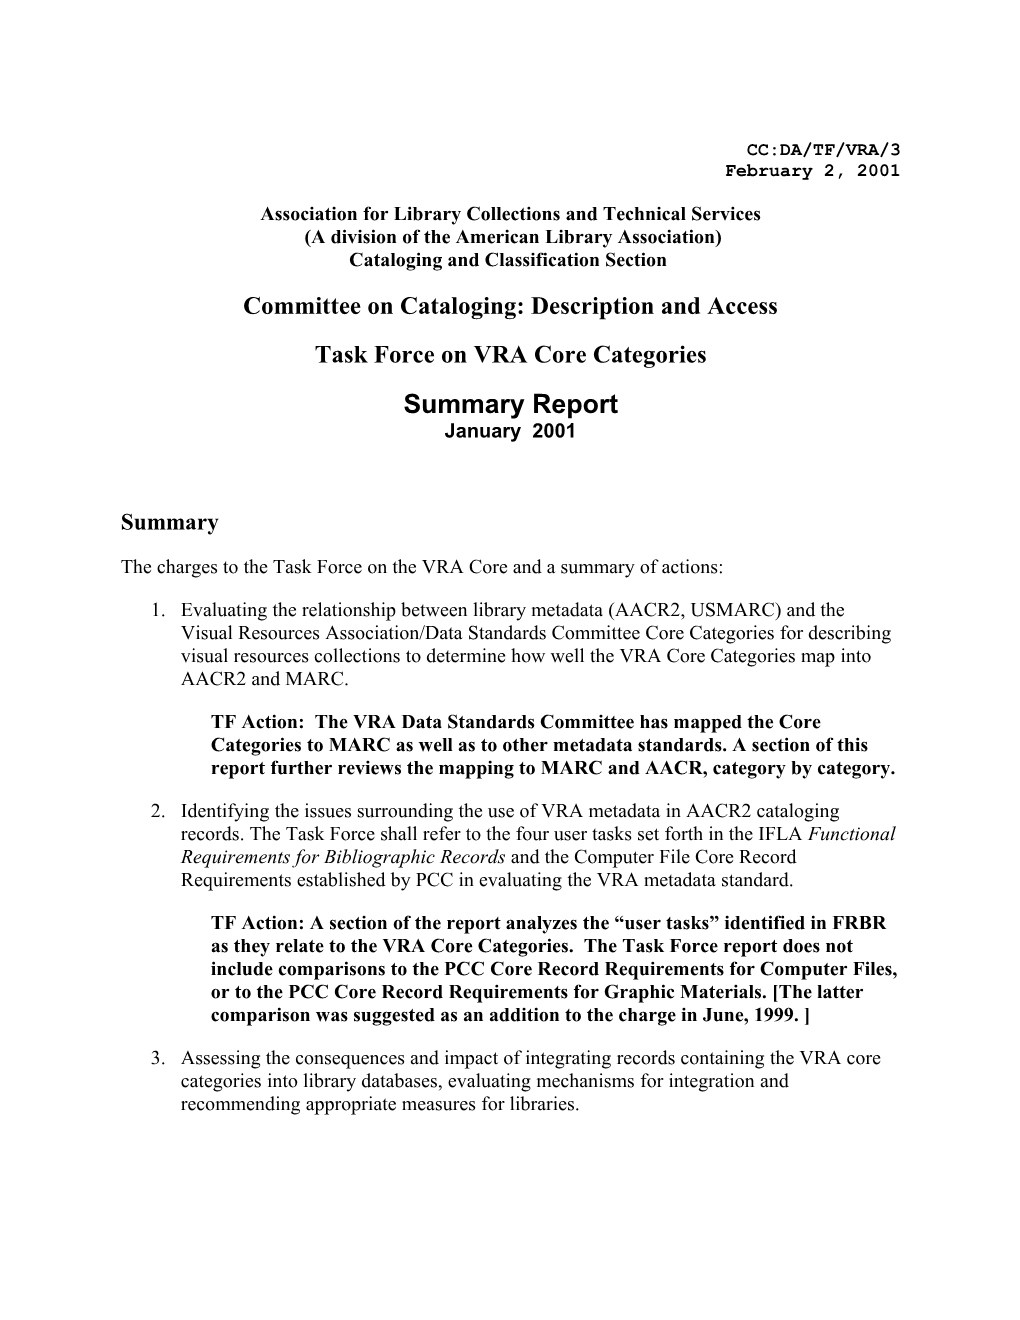 CC:DA Task Force on VRA Core Categories